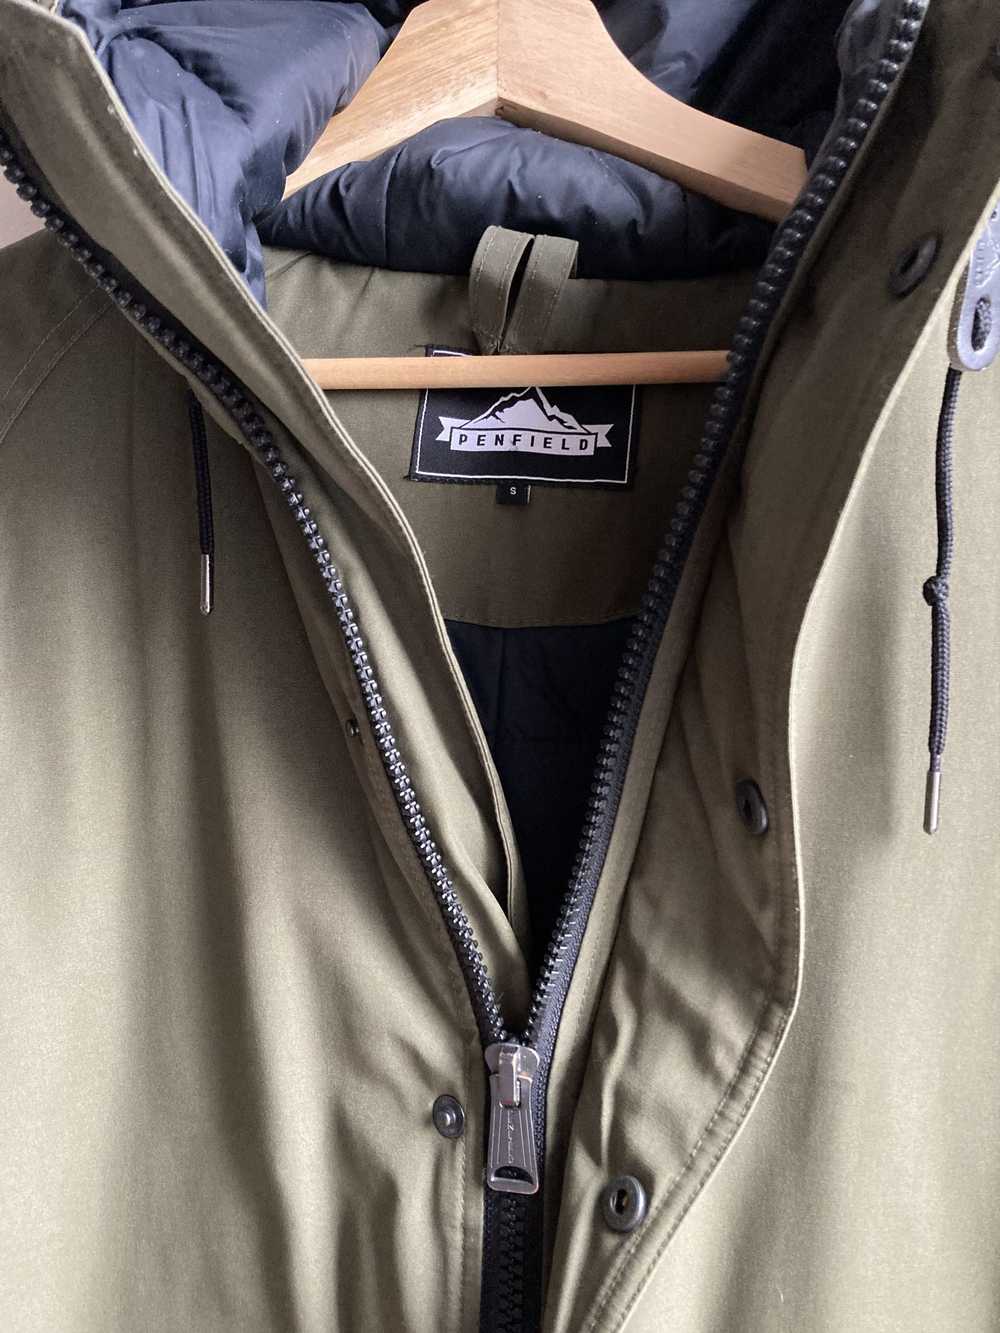 Penfield Kingman Jacket - Winter Coat - image 4